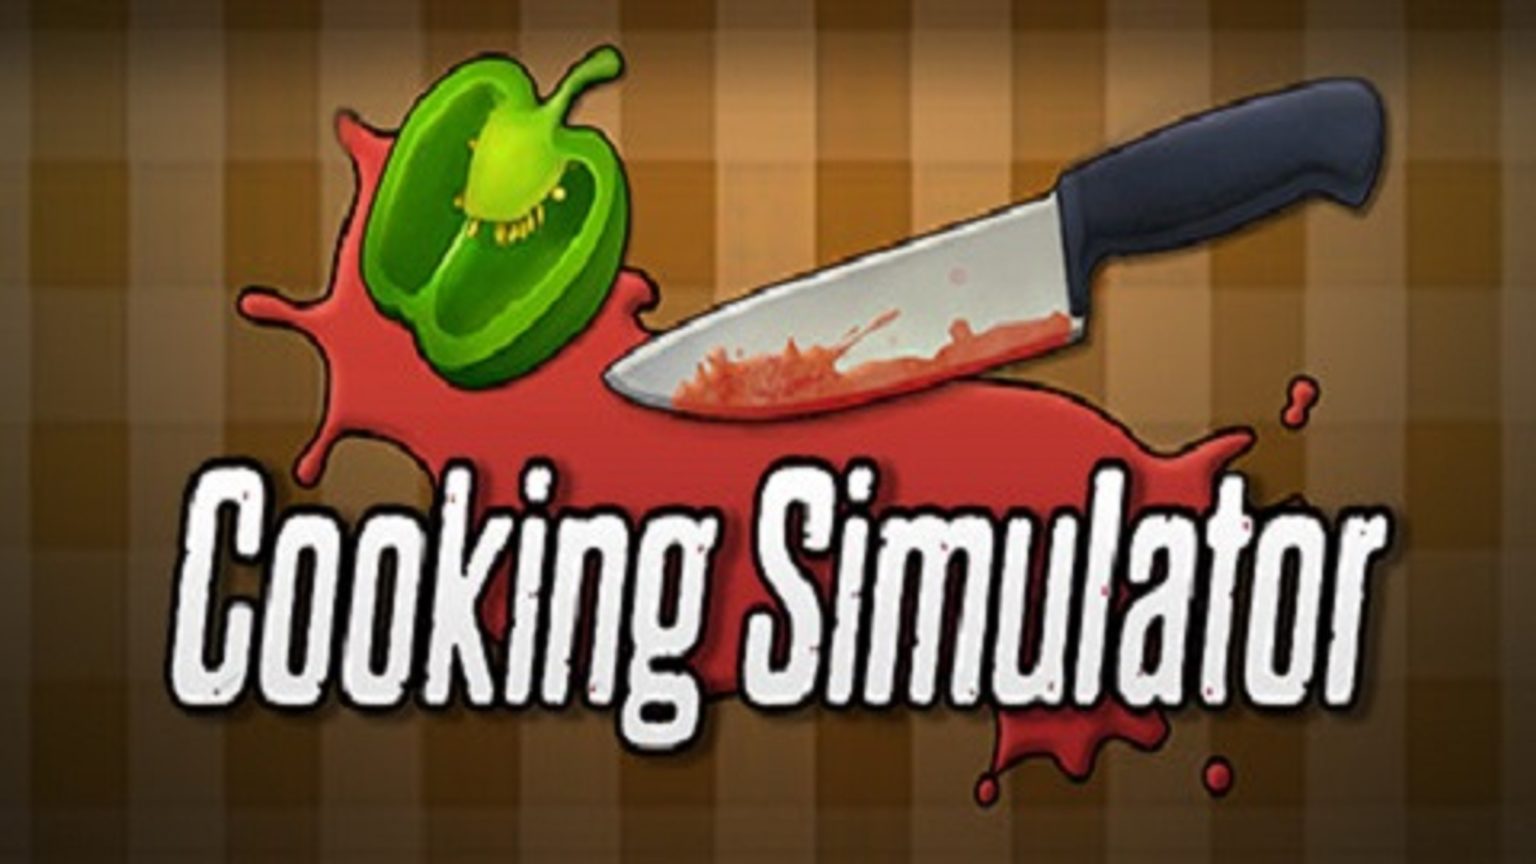 cooking simulator free mac download